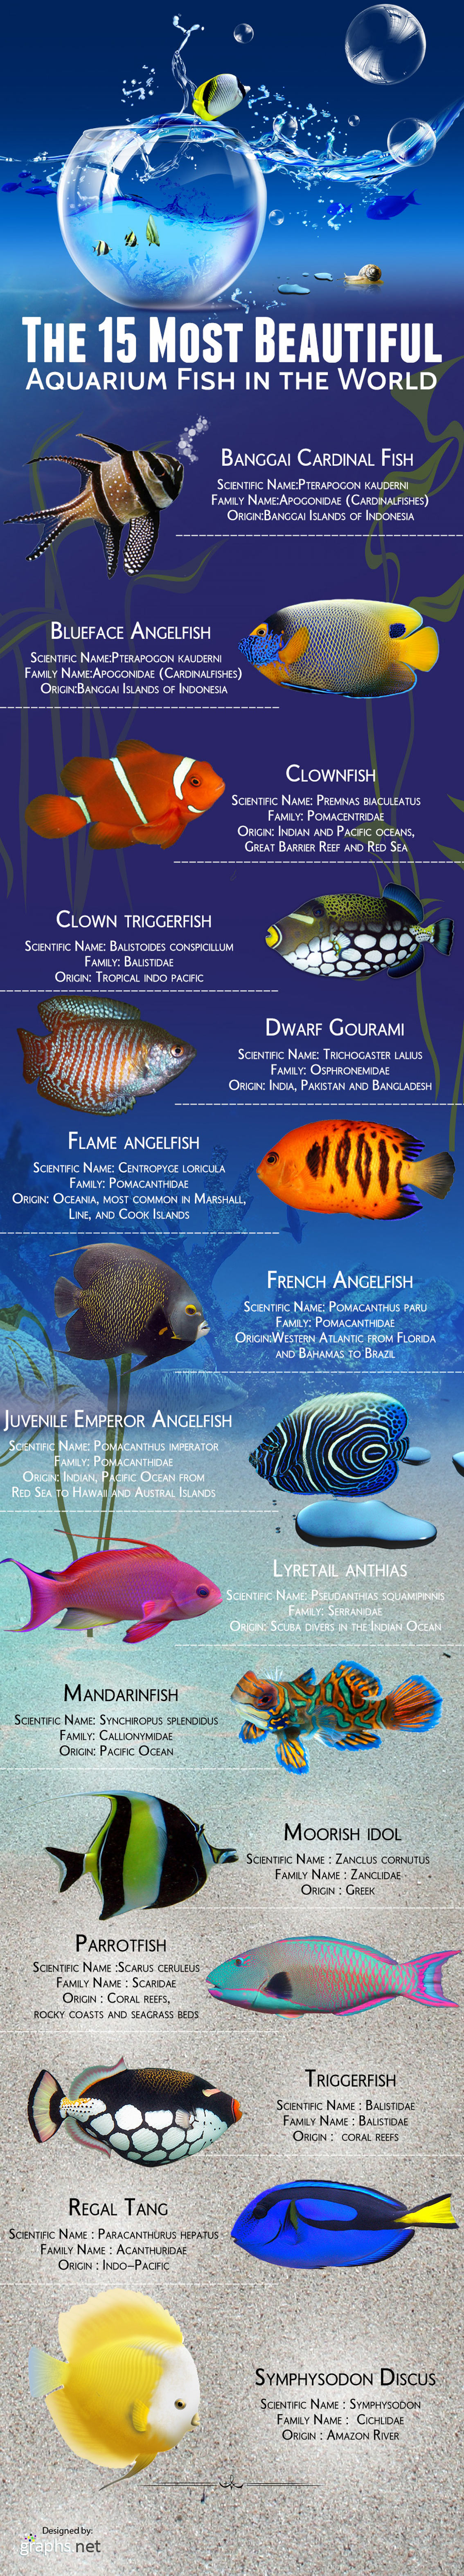 Most Beautiful Aquarium Fish in the World - Pet Infographic